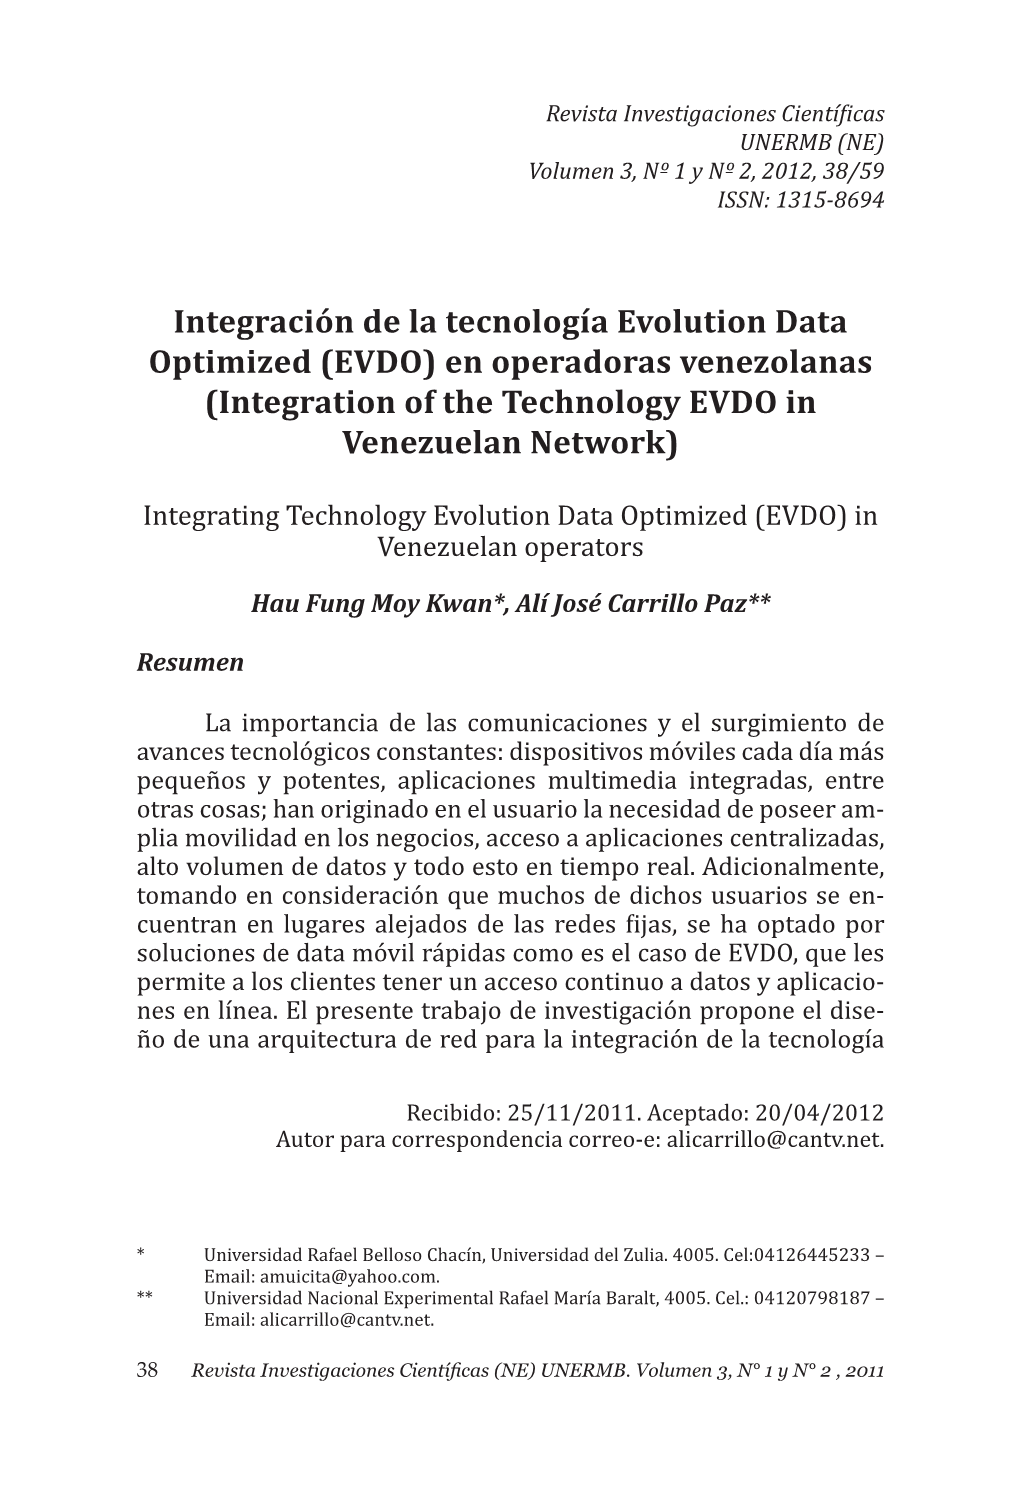 Integración De La Tecnología Evolution Data Optimized (EVDO) En Operadoras Venezolanas (Integration of the Technology EVDO in Venezuelan Network)